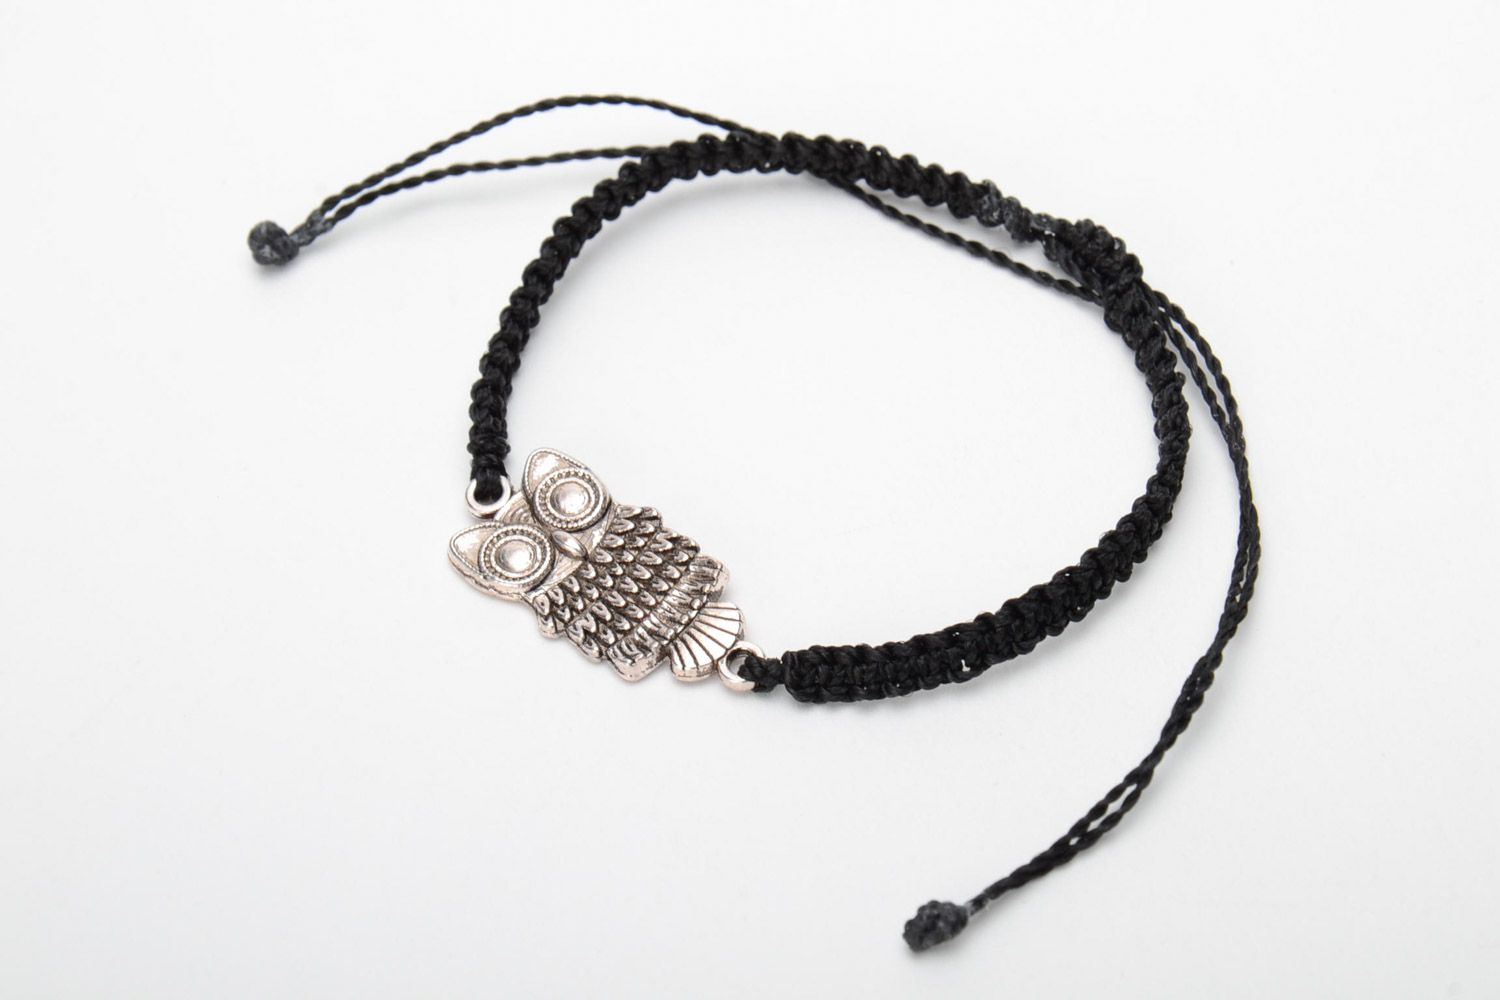 Handmade black woven capron thread wrist bracelet with metal charm in the shape of owl photo 3